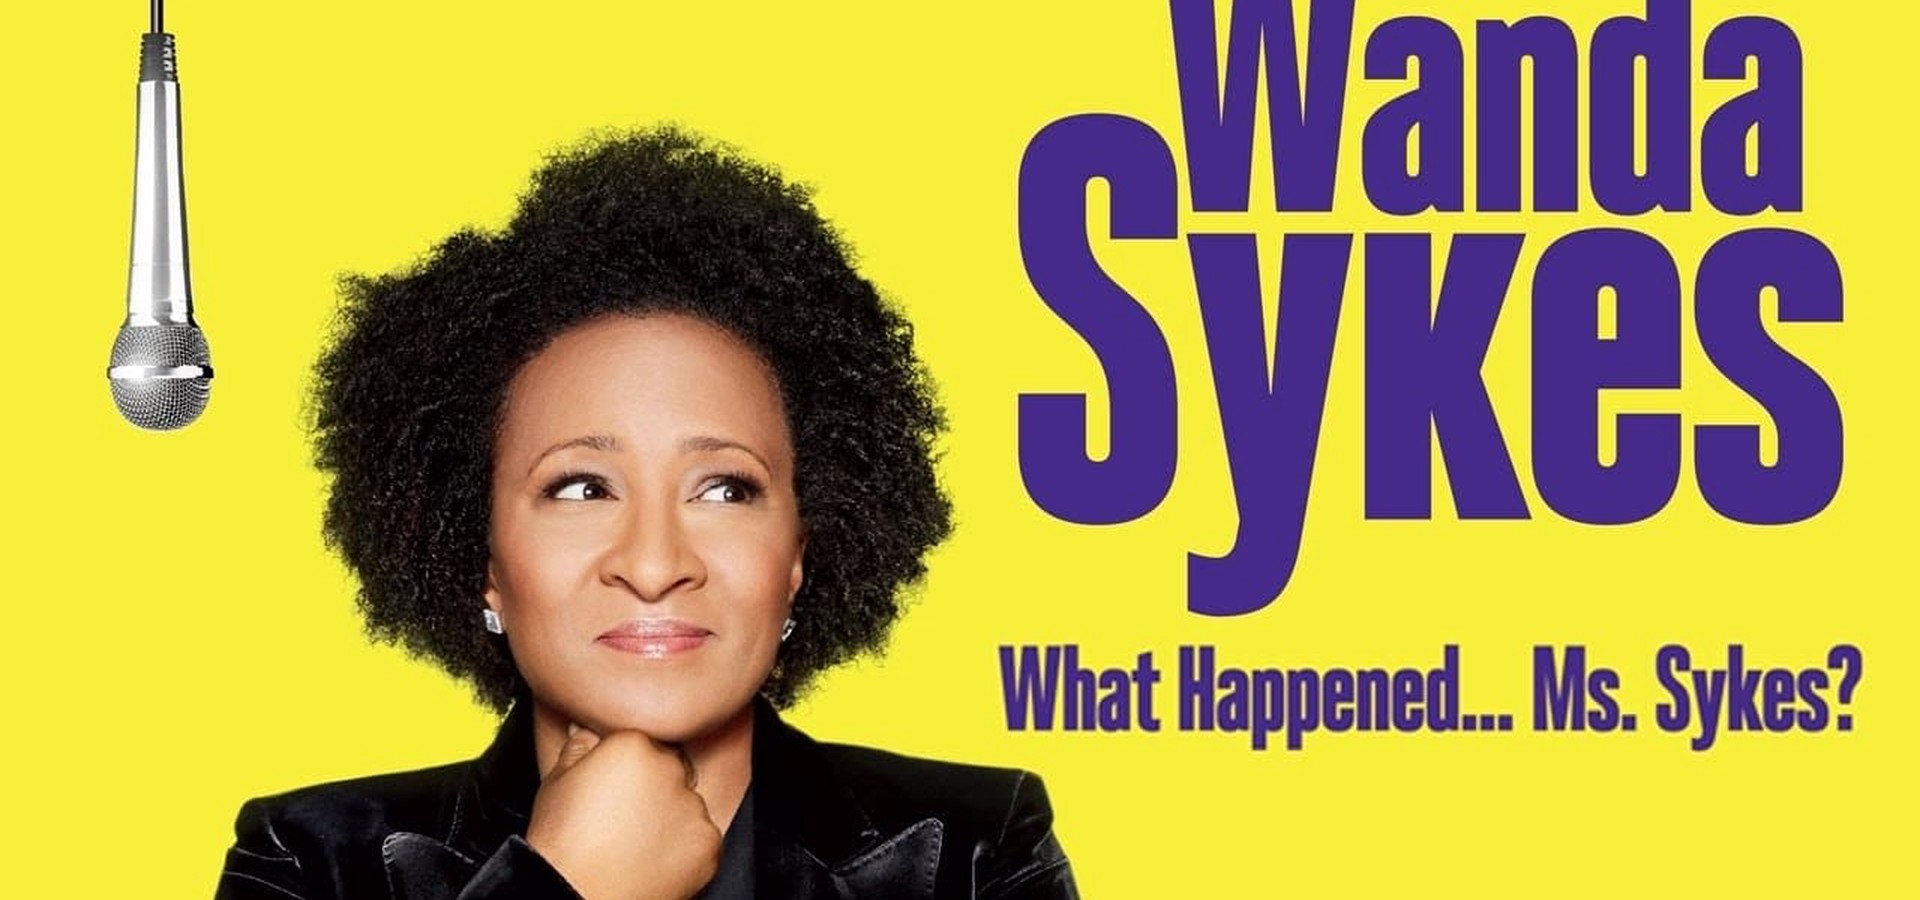 Wanda Sykes: What Happened... Ms. Sykes?